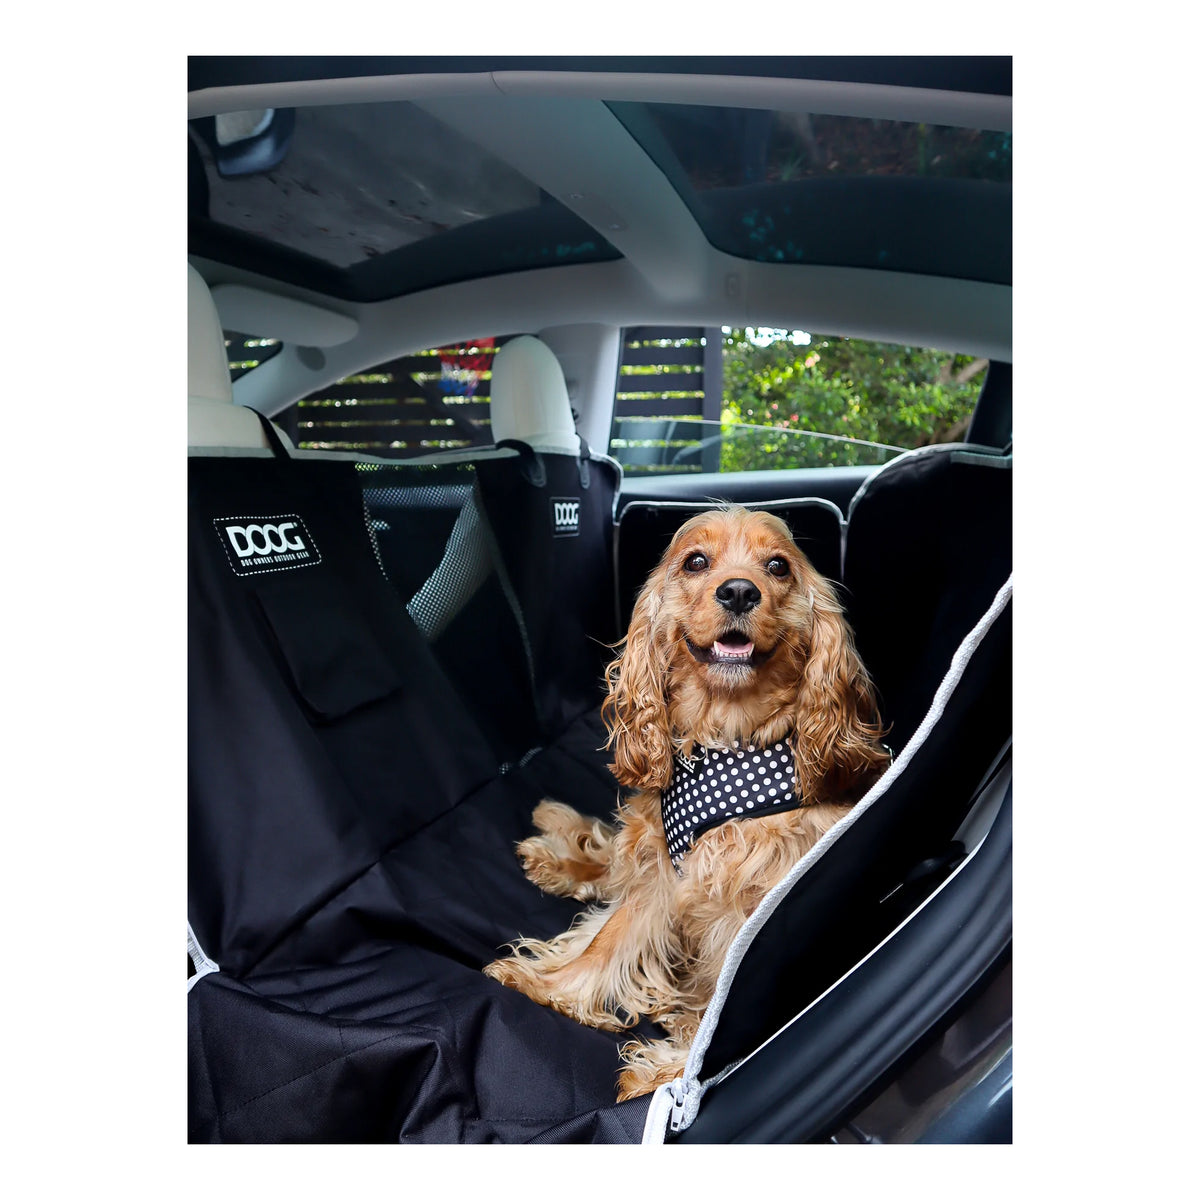 DOOG Car Seat Cover - Black